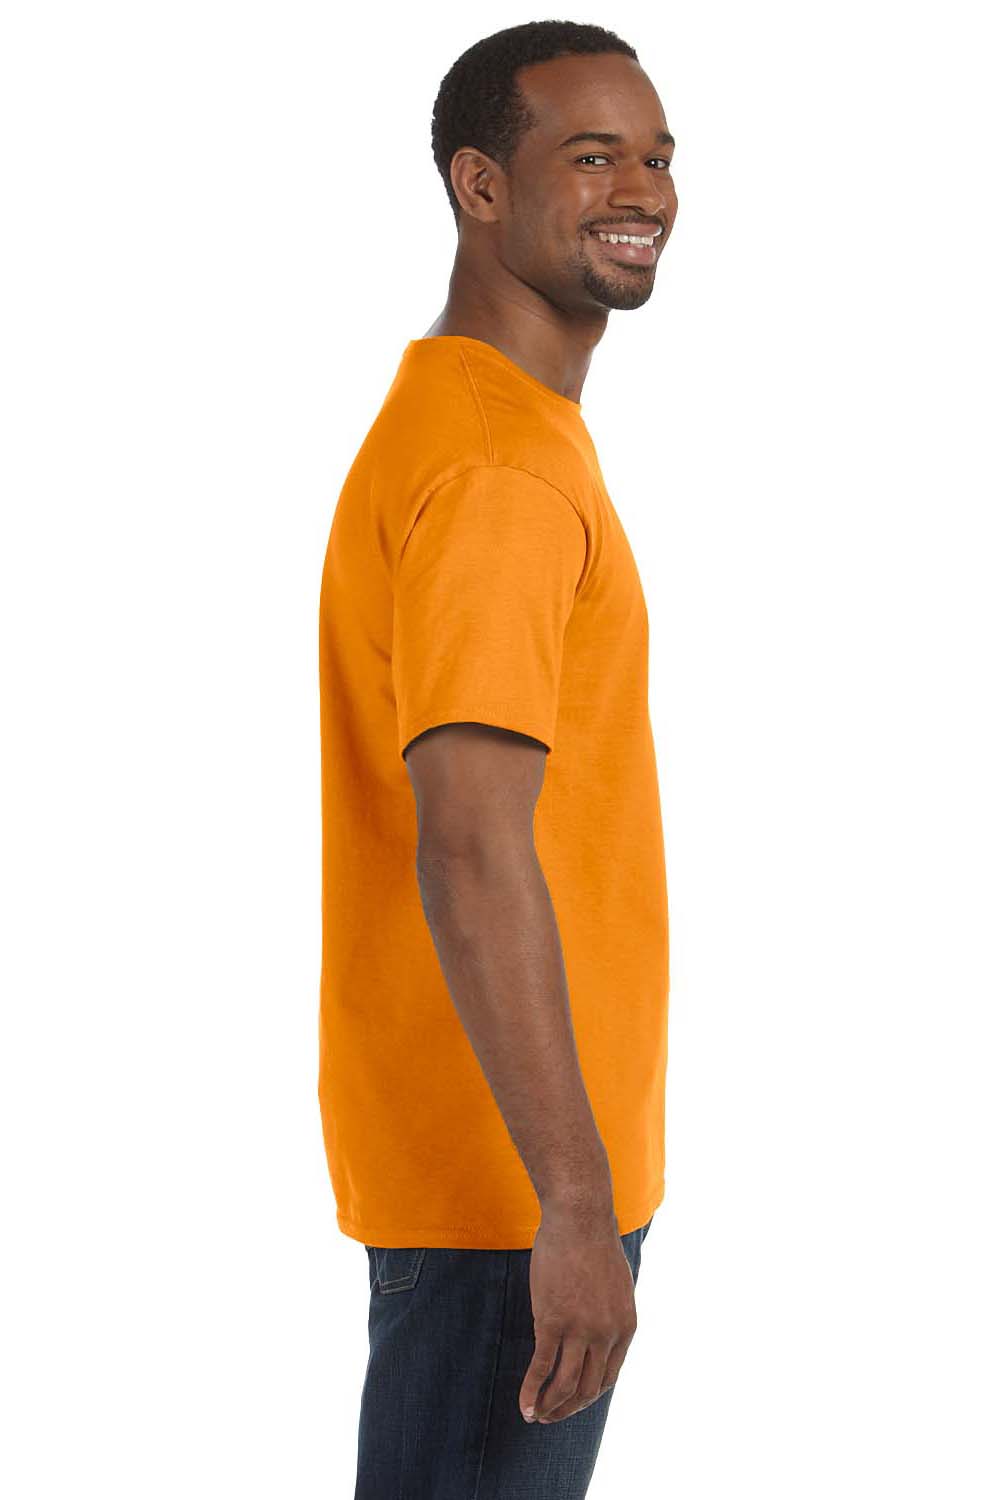 Hanes 5250T Mens ComfortSoft Short Sleeve Crewneck T-Shirt Safety Orange Side